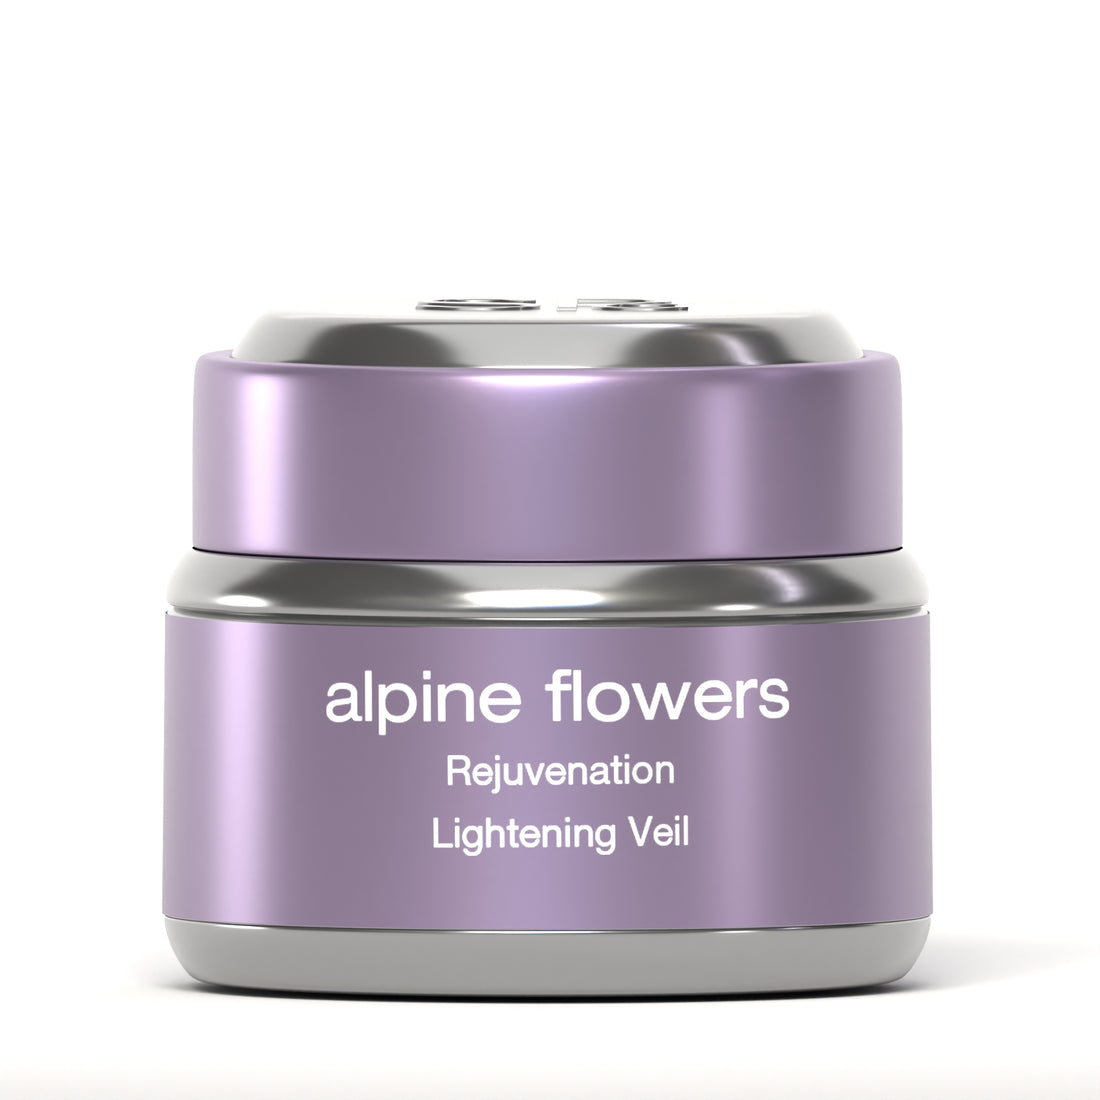 alpine flowers Lightening Veil